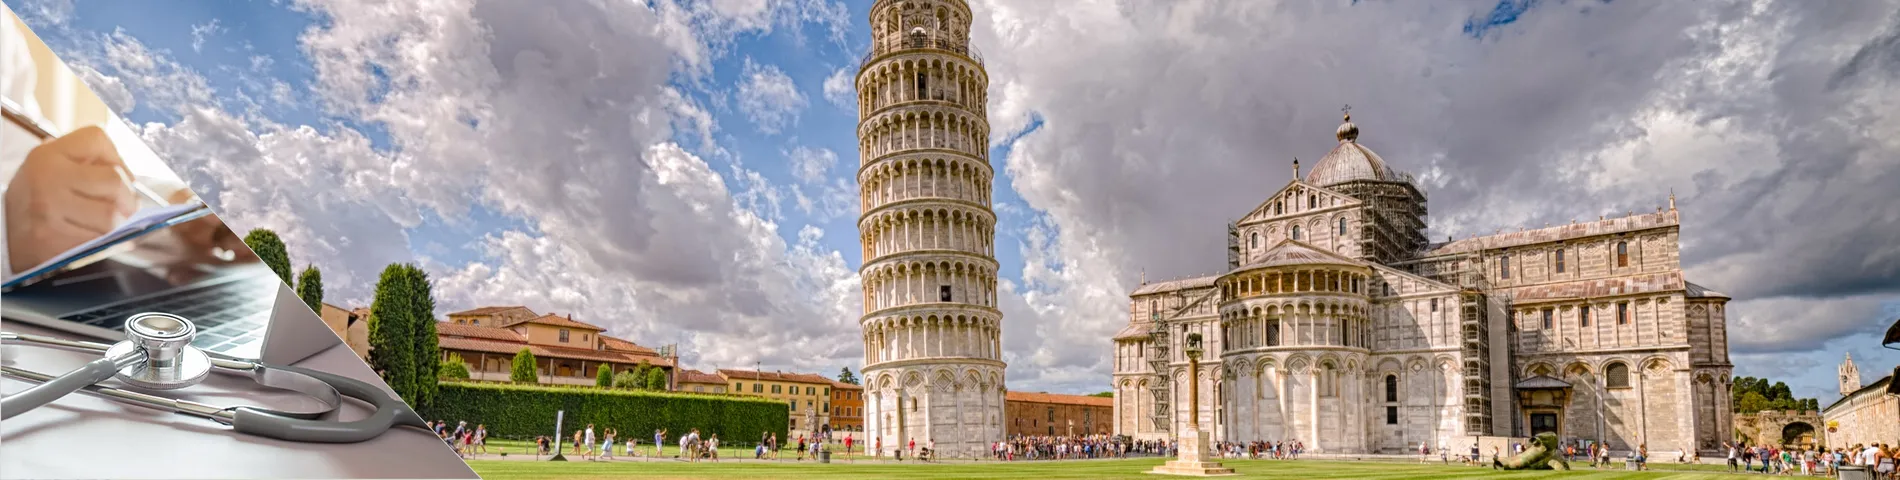 Pisa - Italian for Doctors & Nurses